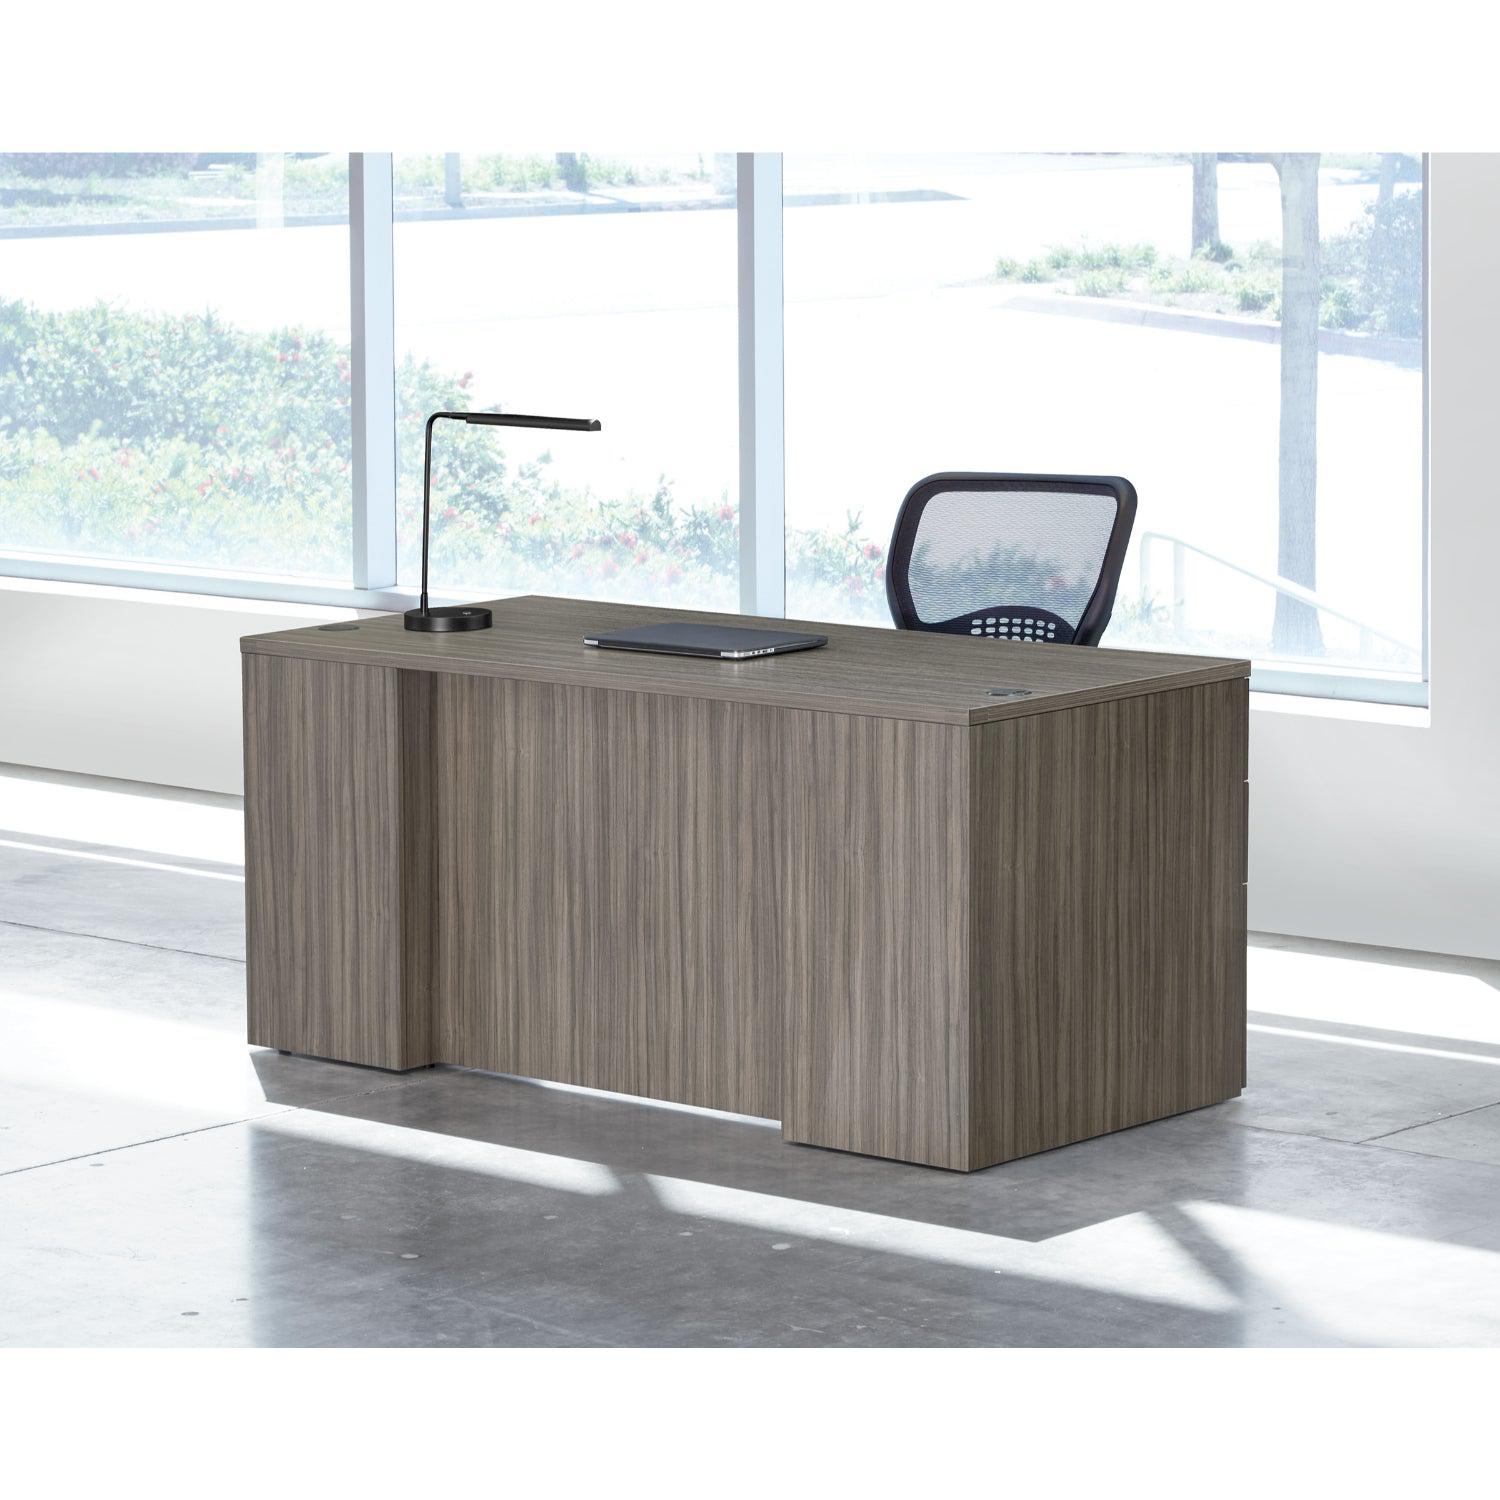 Napa StepFront Double Pedestal Desk, 66” x 30” x 29" H